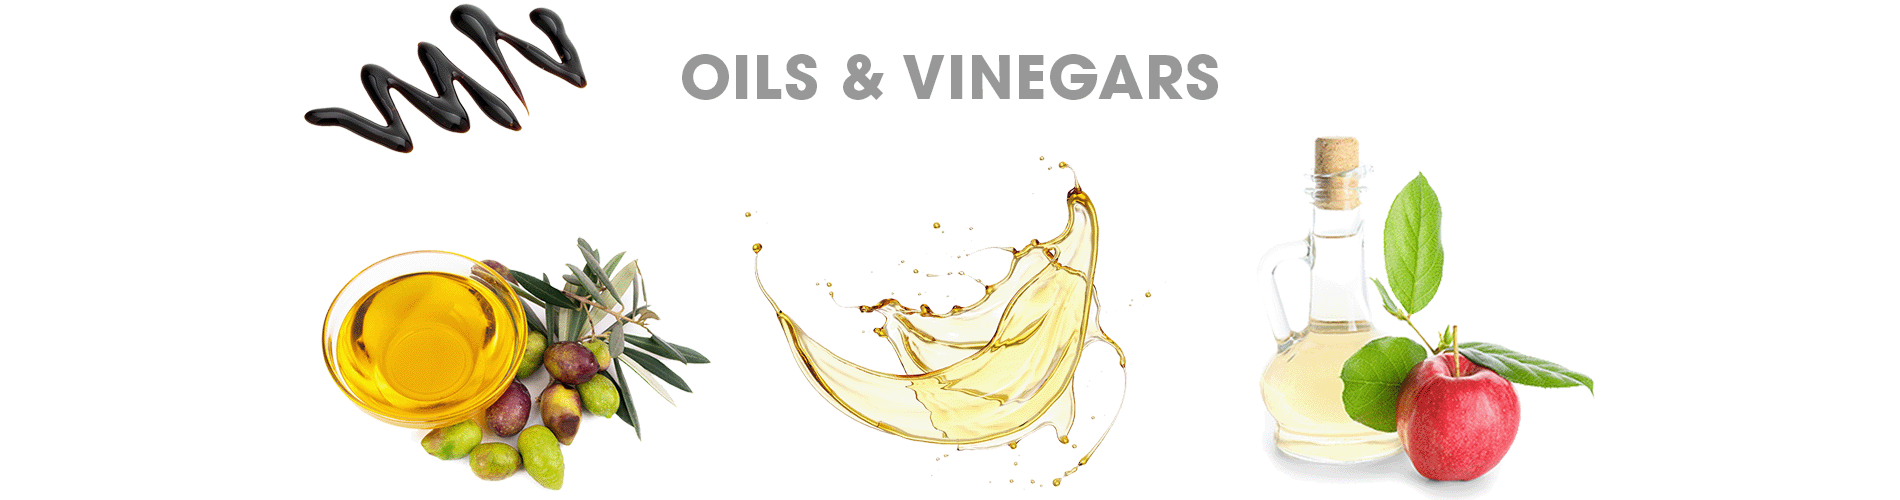 Category - Oils-Vinegar 1900x500